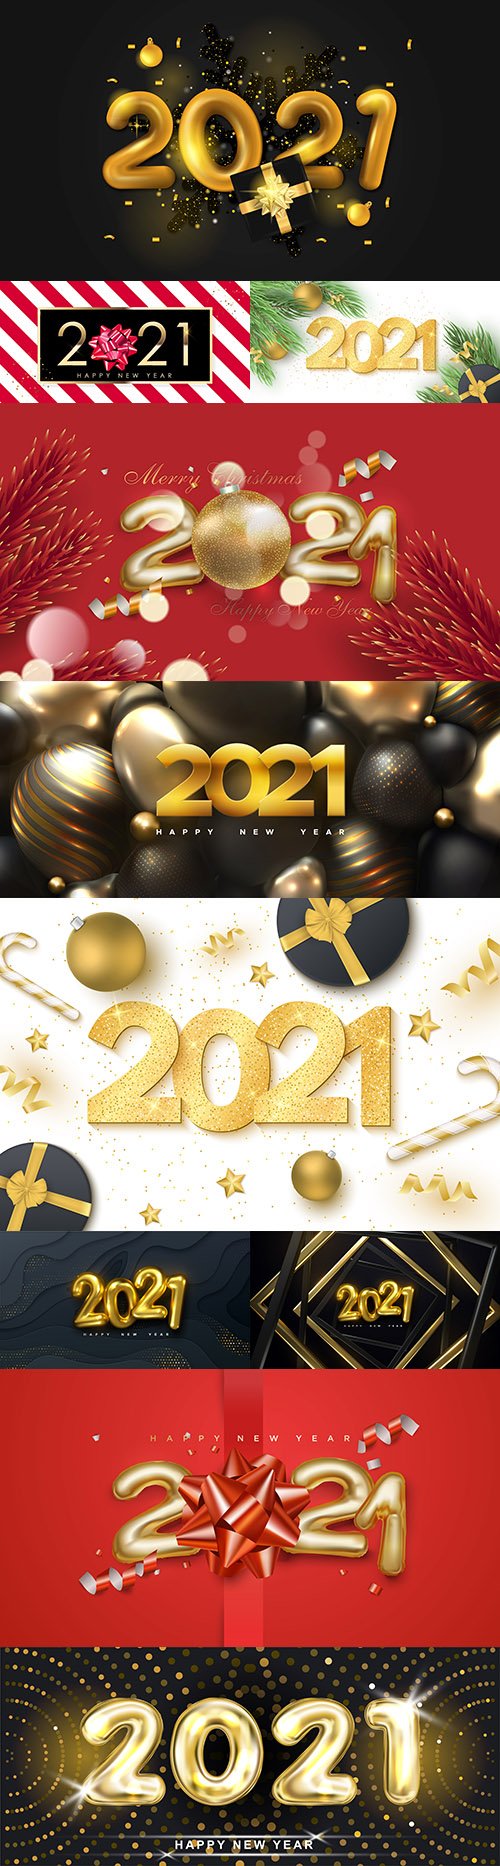 2021 New Year's illustrations Festive design inscription 3